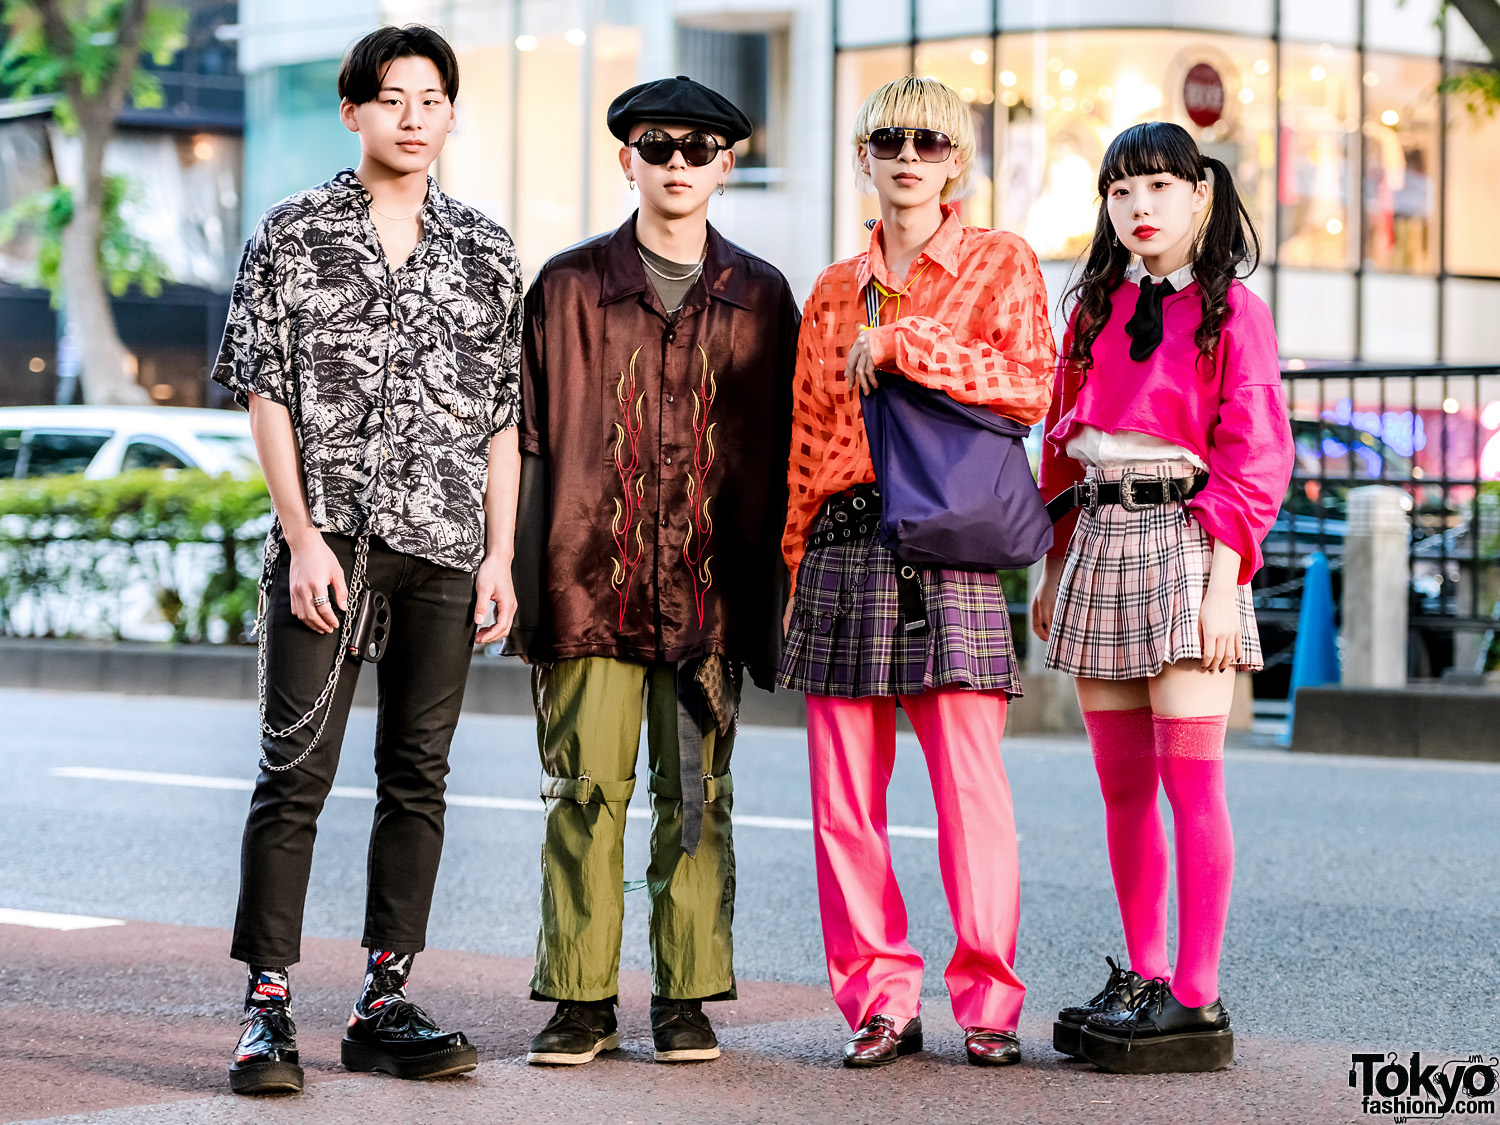 Japanese Teen Streetwear w/ Undercover, BlackMeans, John Lawrence Sullivan, Gogosing, Chrome Hearts, Bubbles & Vintage